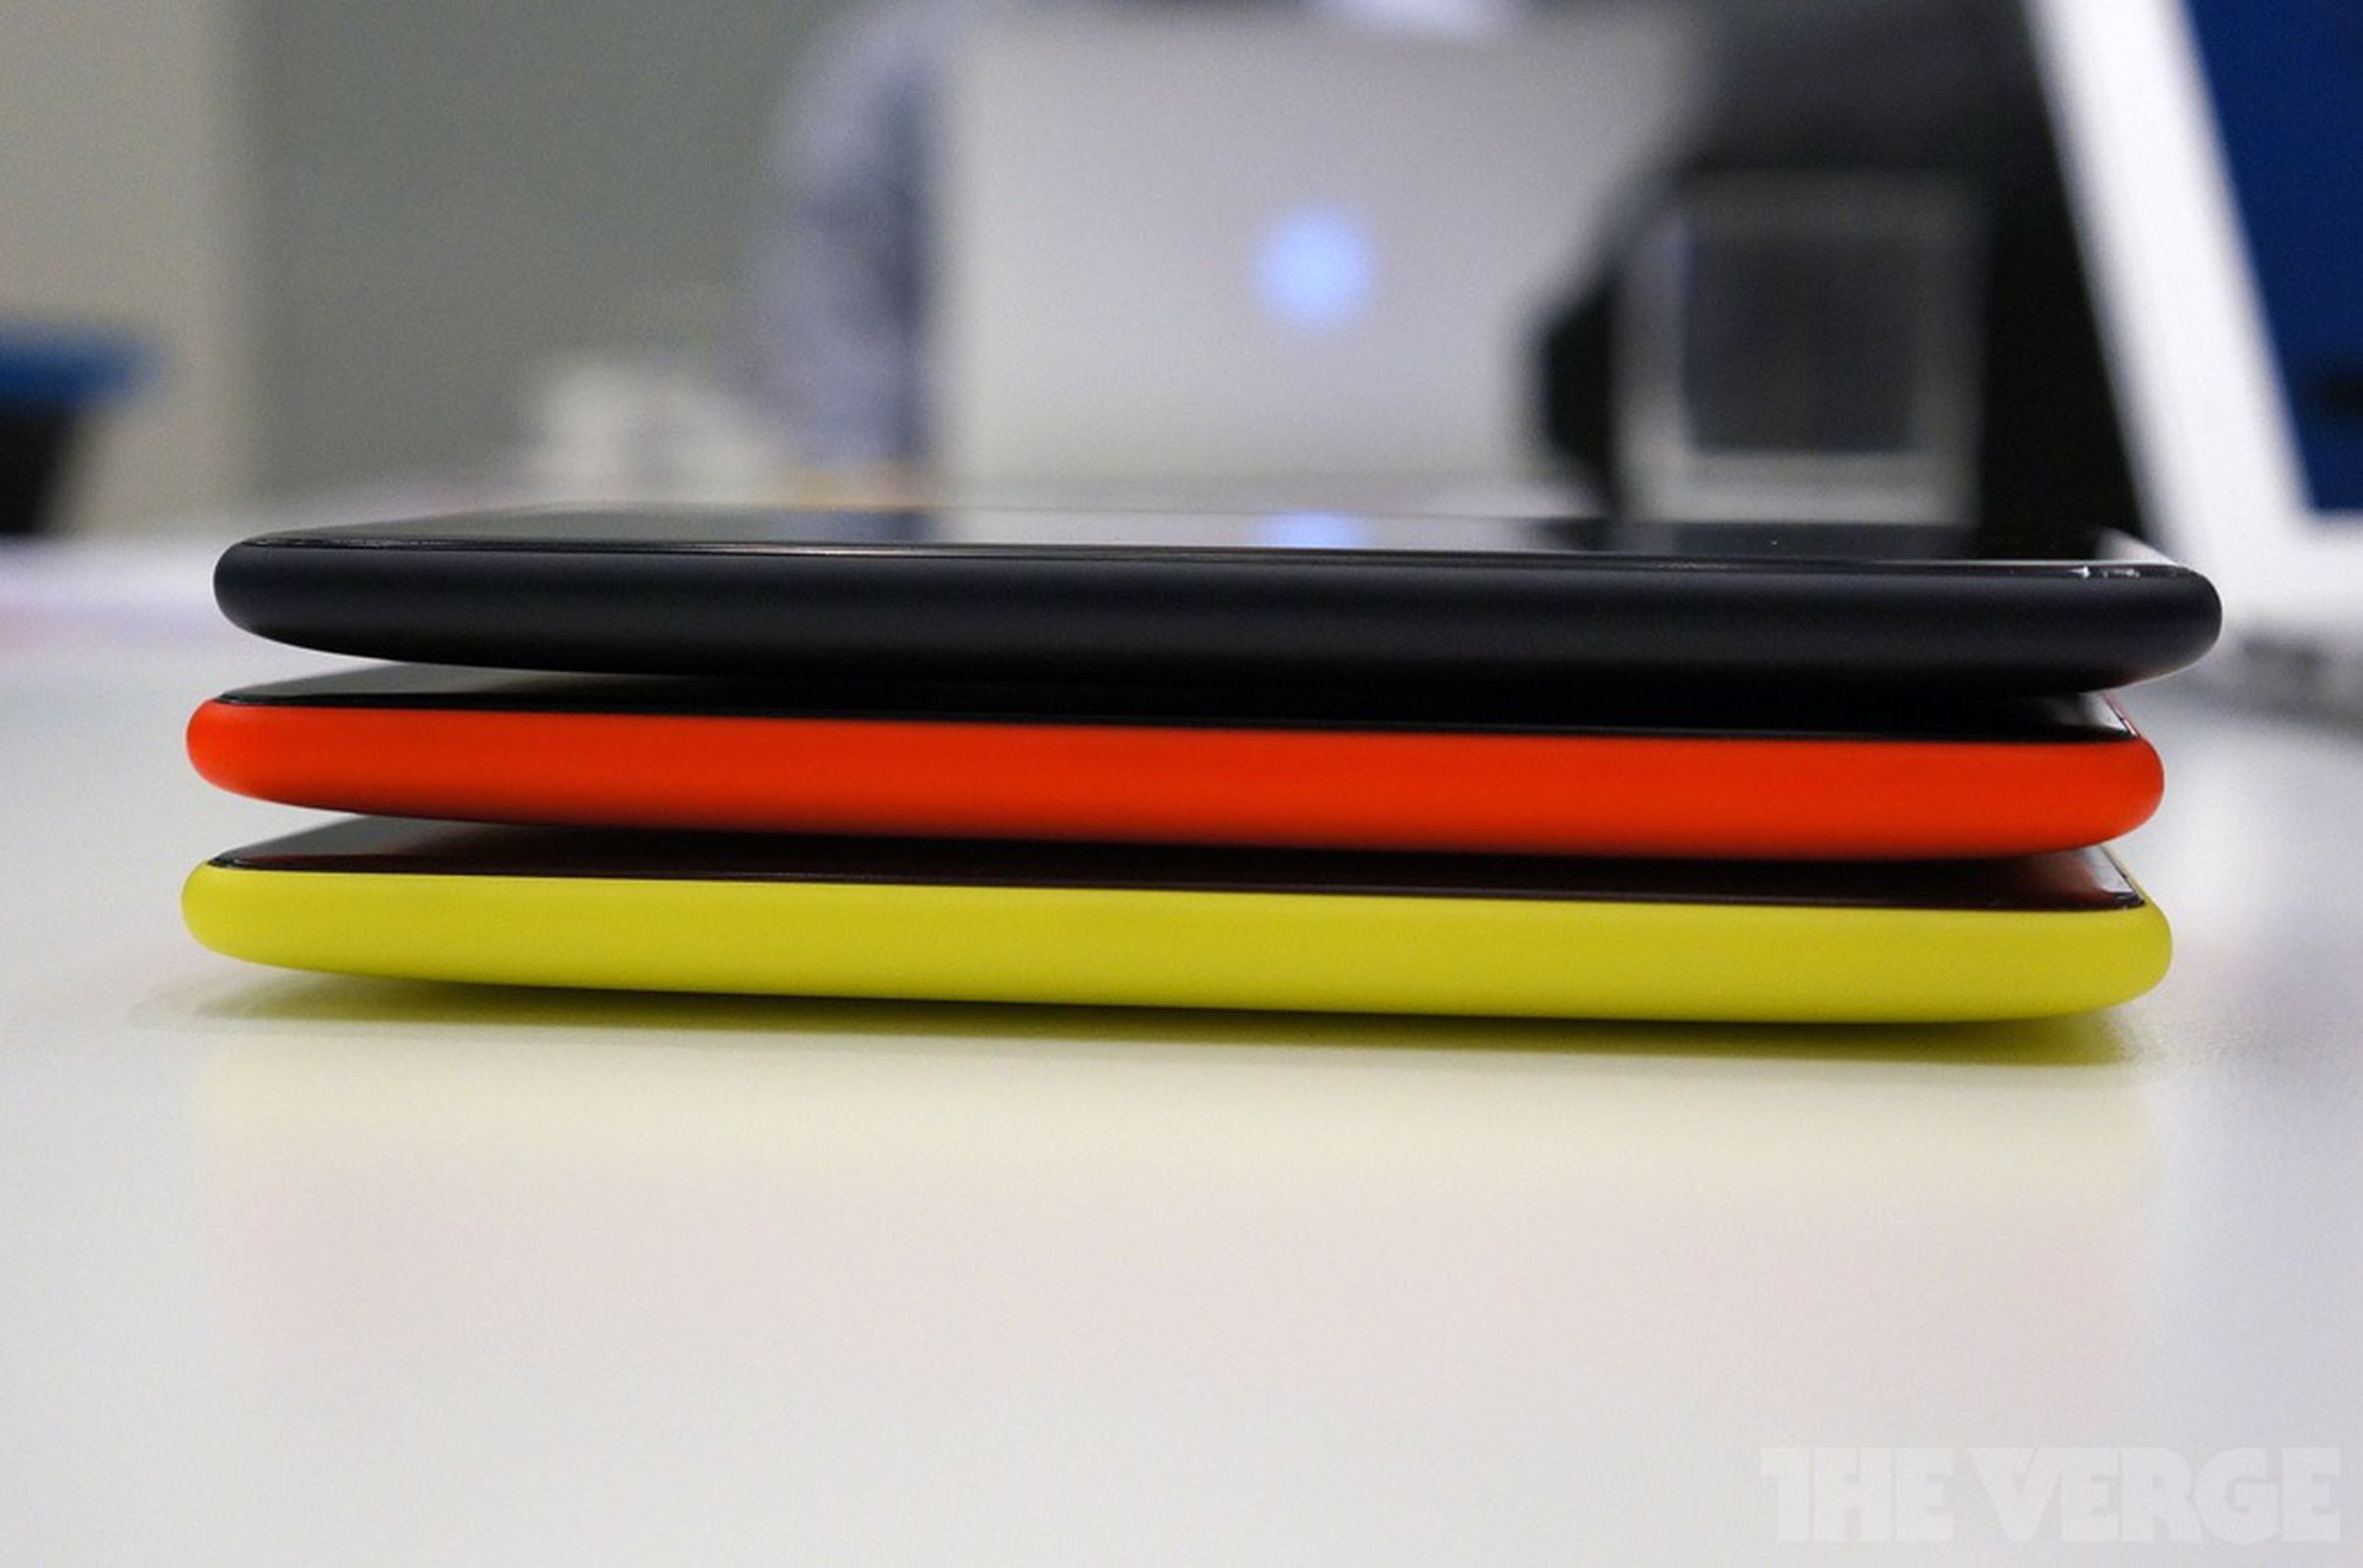 Nokia Lumia 625 hands-on photos